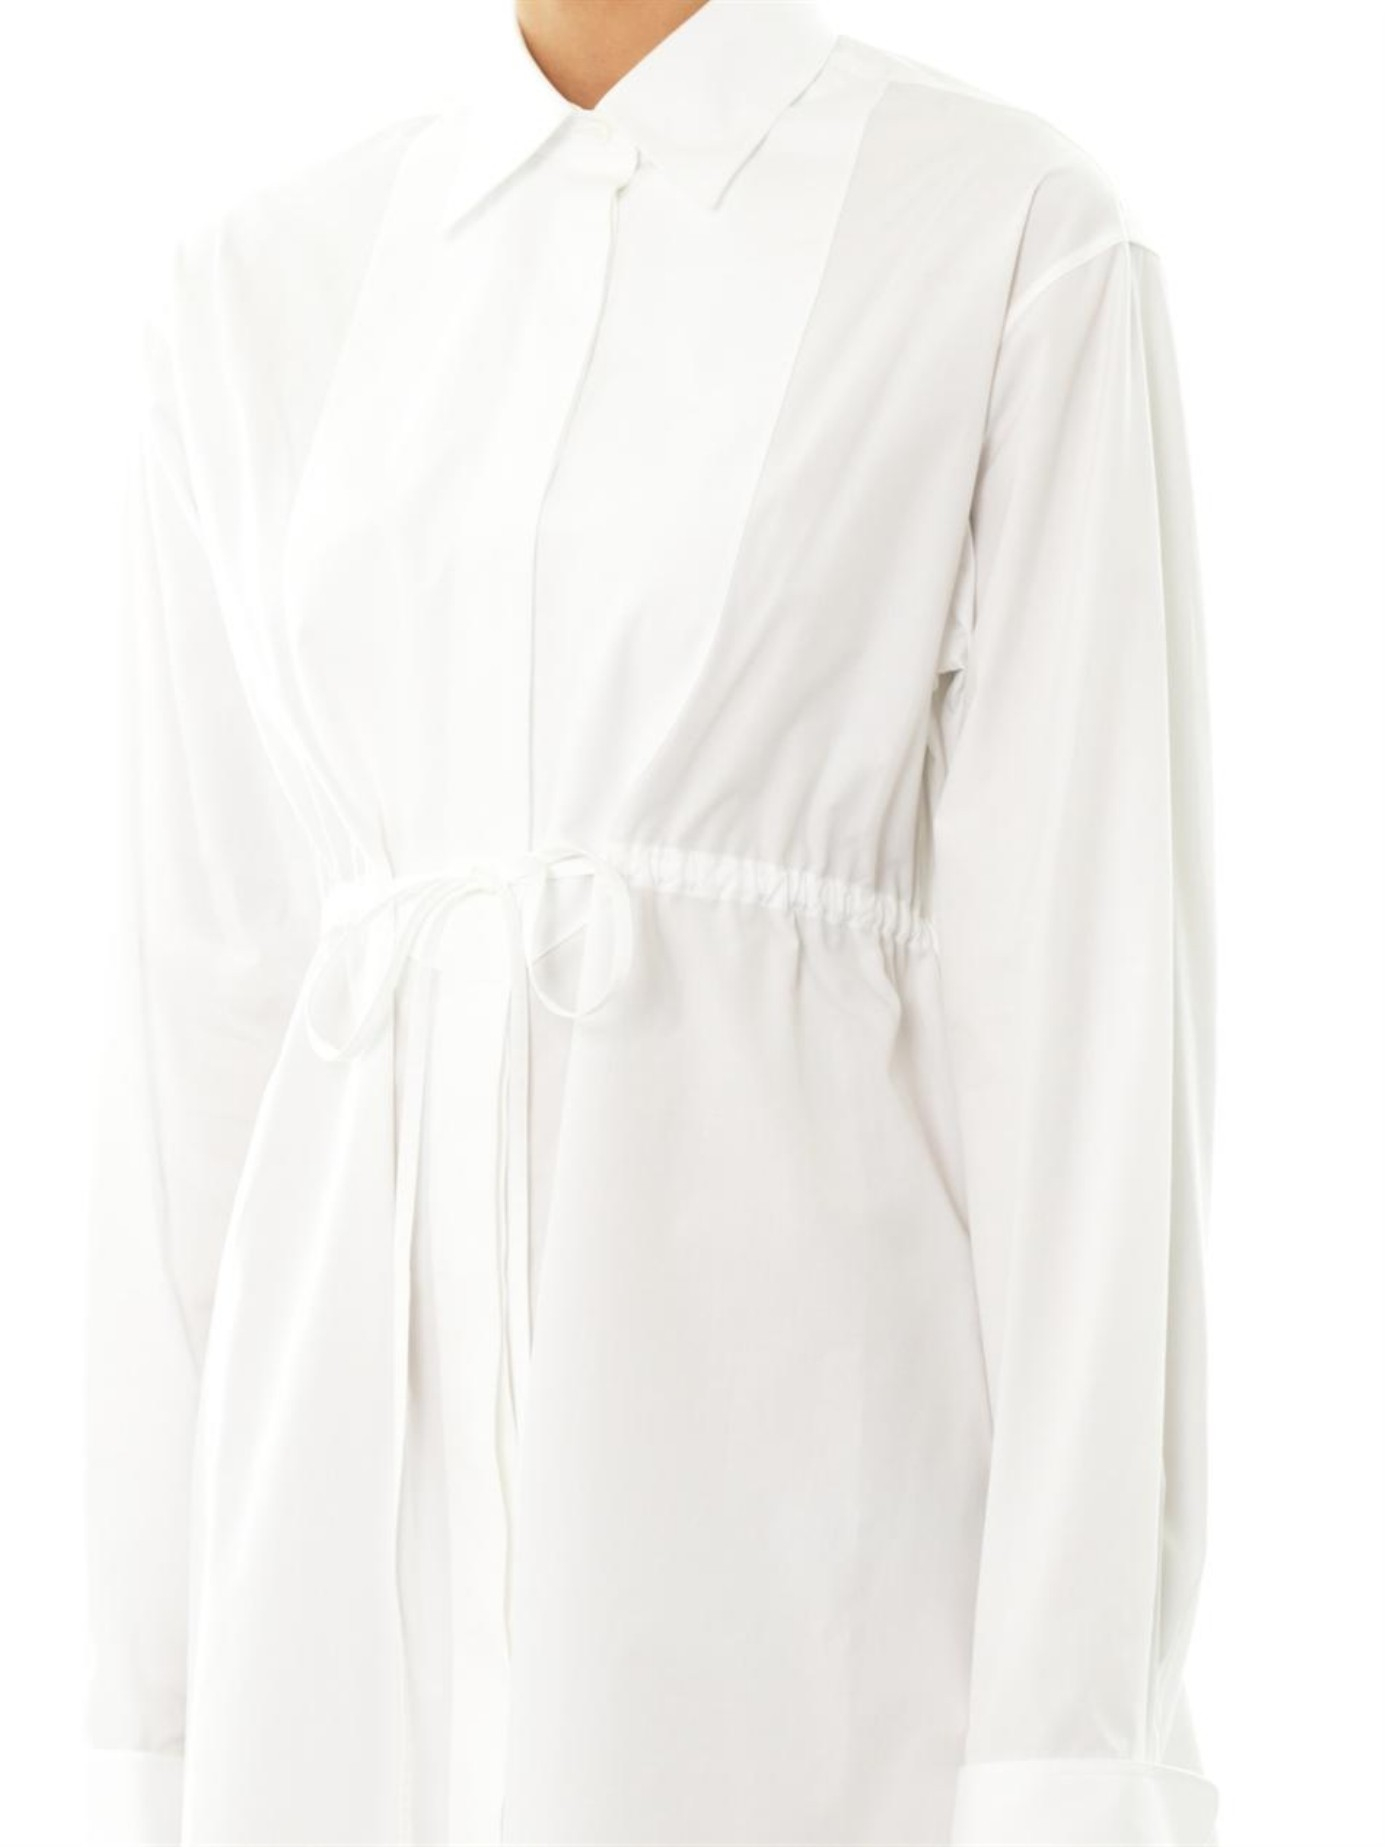 Alaia Shirt Dress Top Sellers, 53% OFF | www.ingeniovirtual.com